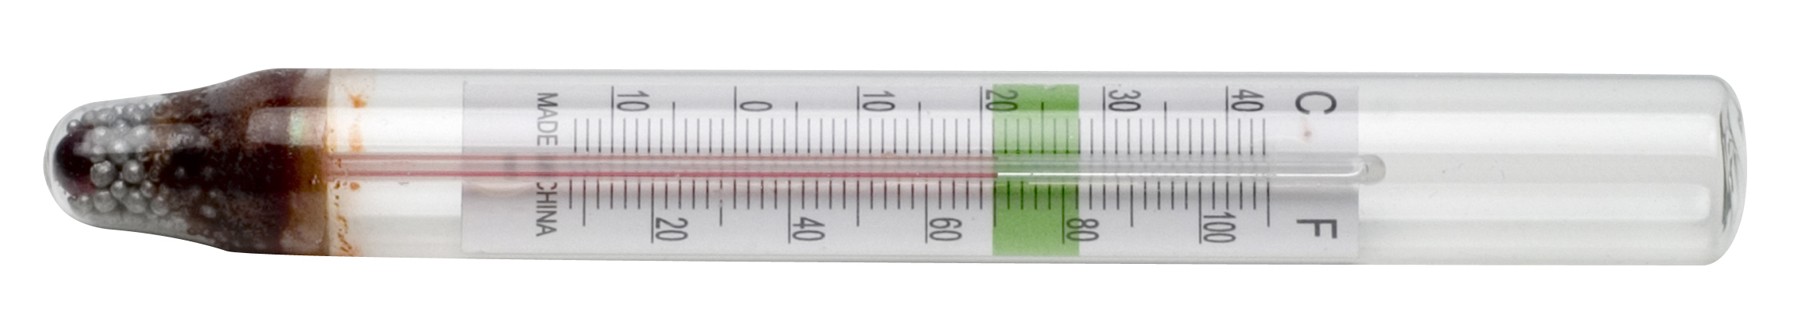 SP Bel-Art, H-B DURAC Liquid-In-Glass Aquarium Thermometer; -10 to 40C (20 to 100F), Organic Liquid Fill